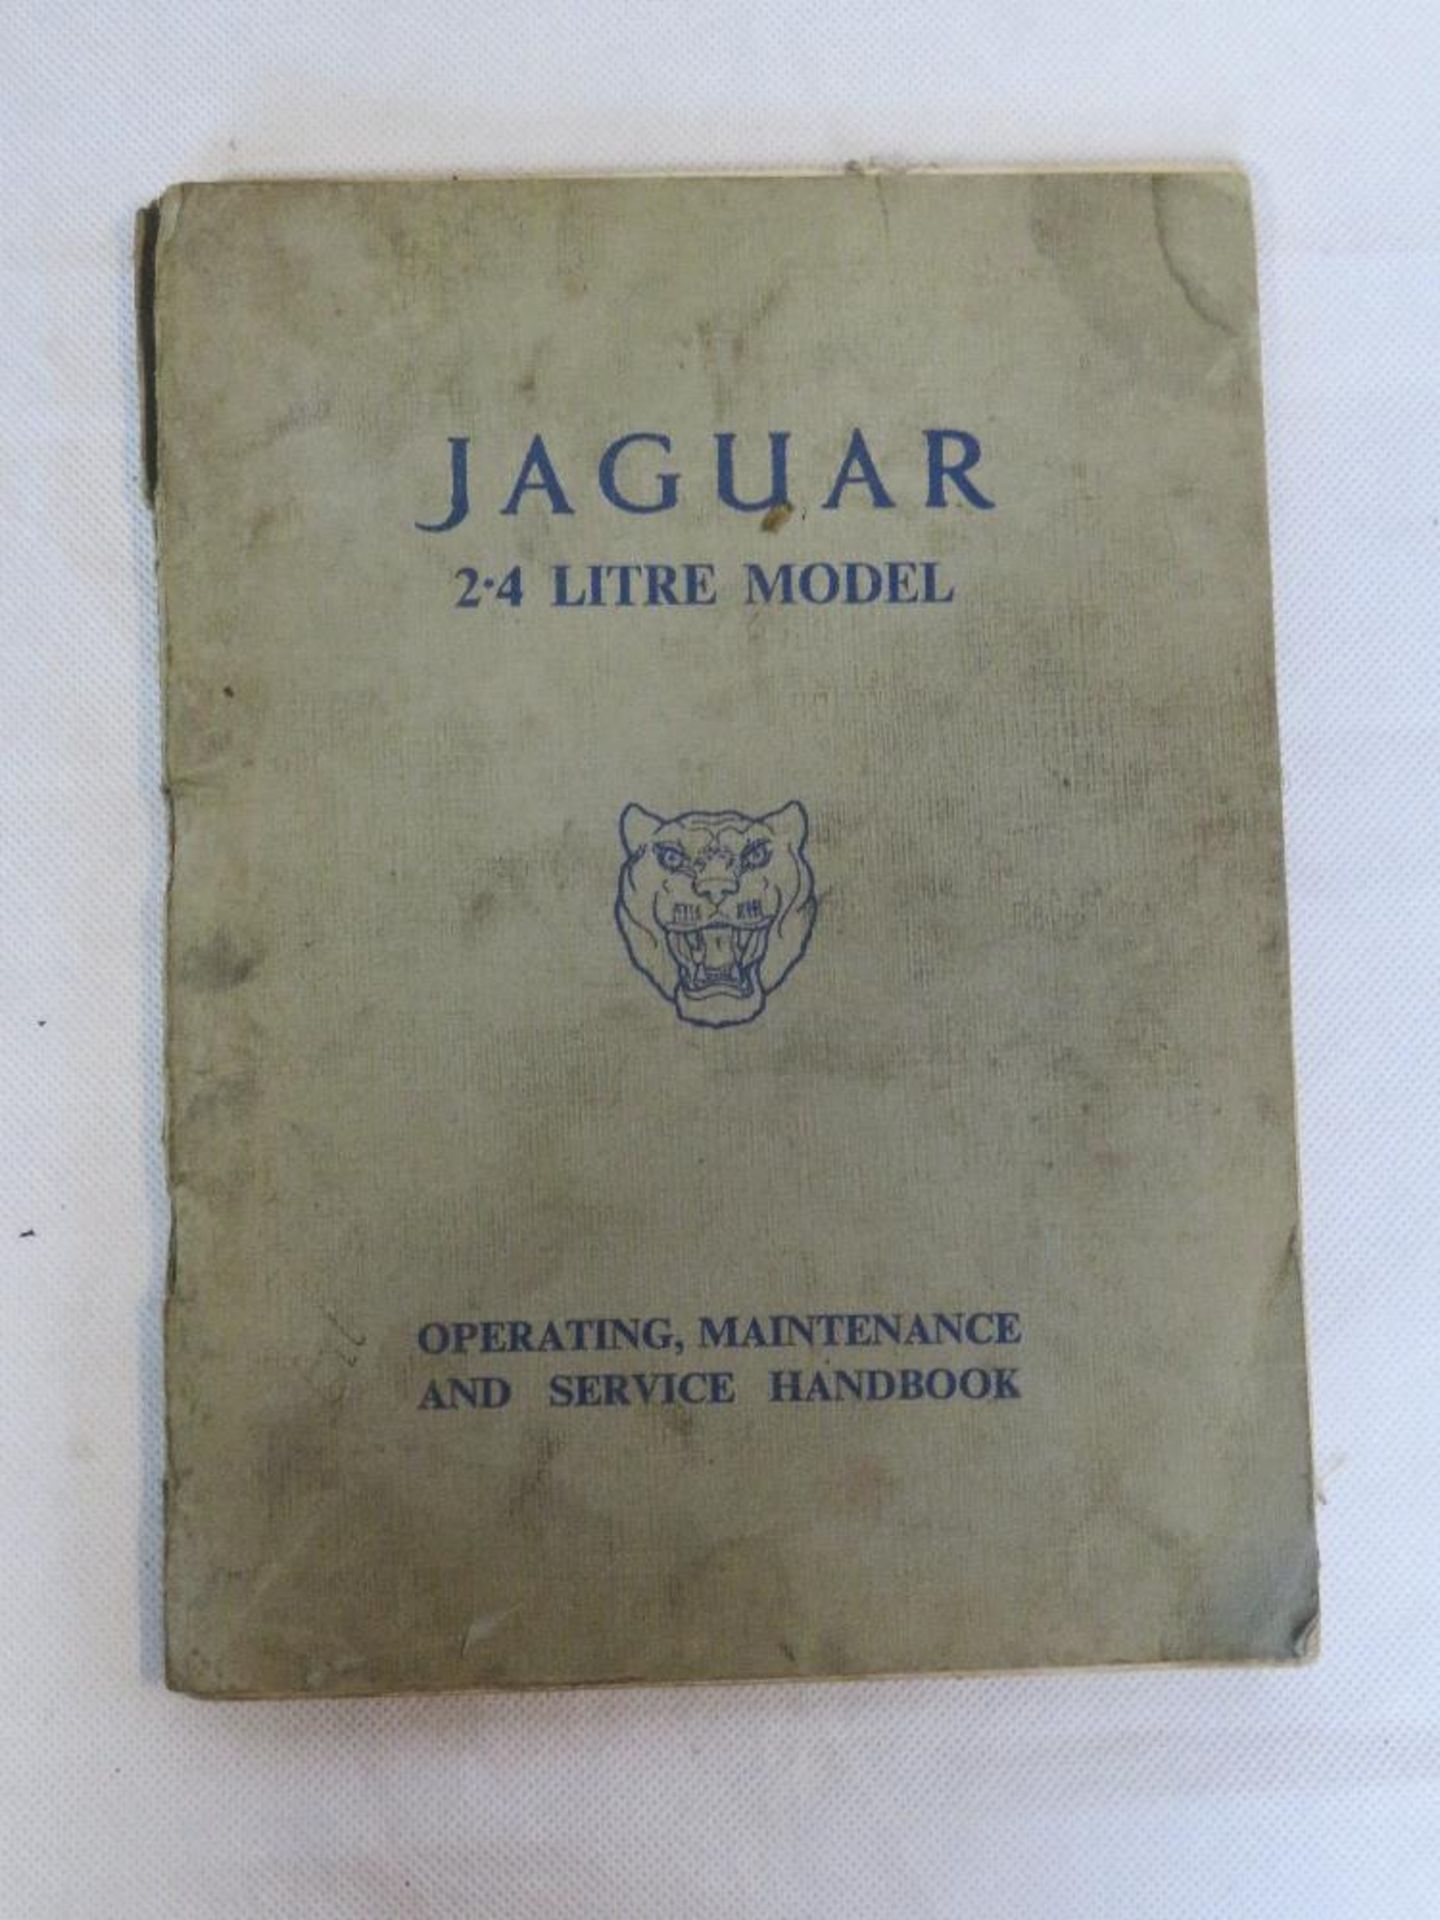 A Jaguar 2.4 litre model operating, maintenance and service handbook.